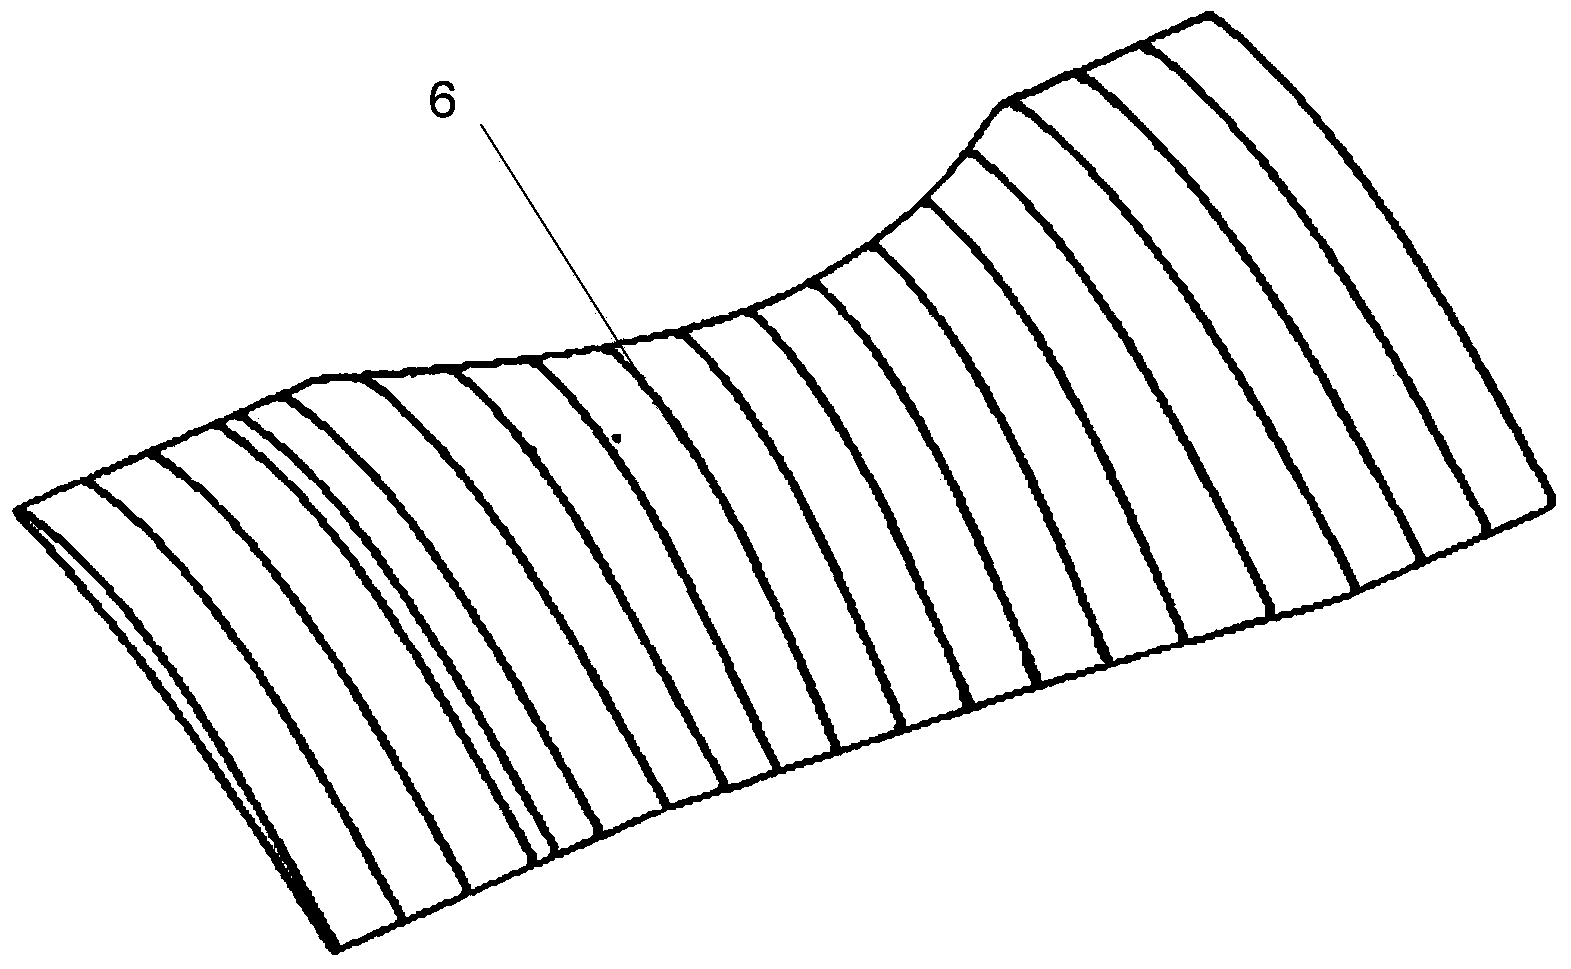 Method for building blade rolling process model